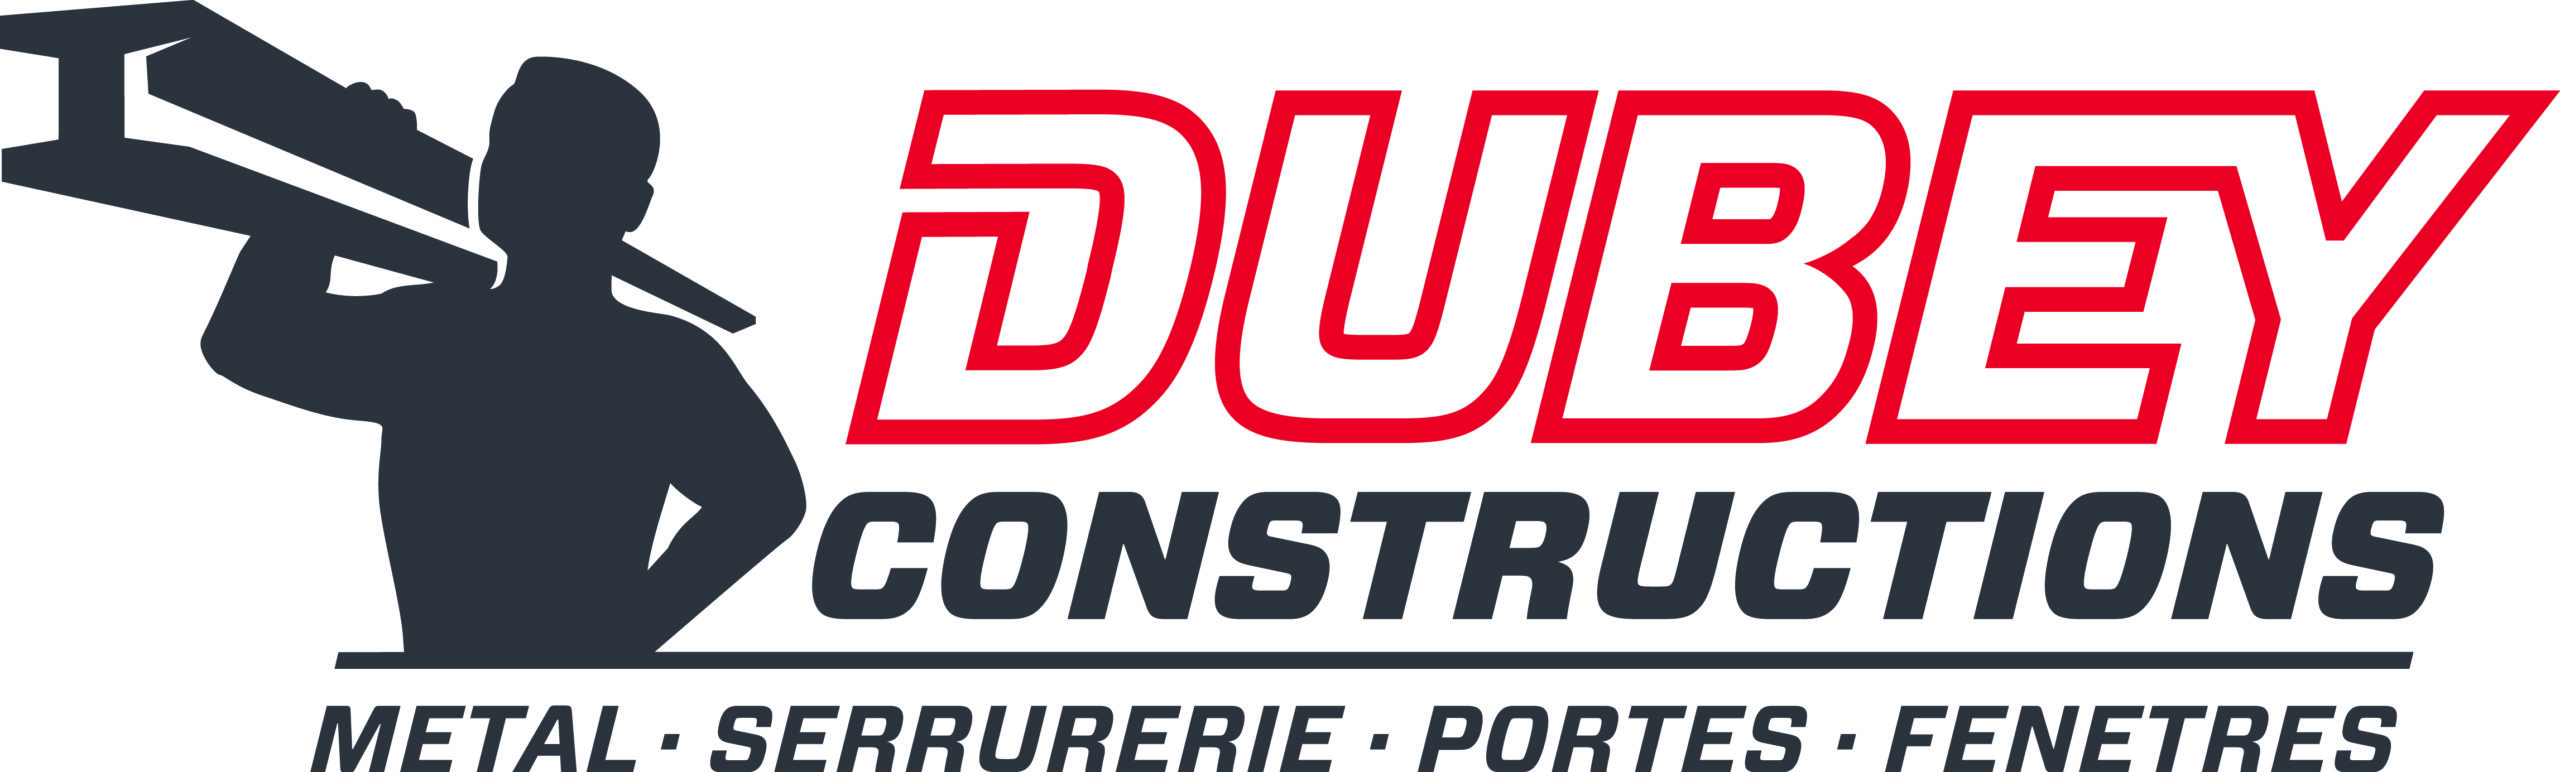 Logo-DUBEY-CONSTRUCTIONS-scaled-1.jpg